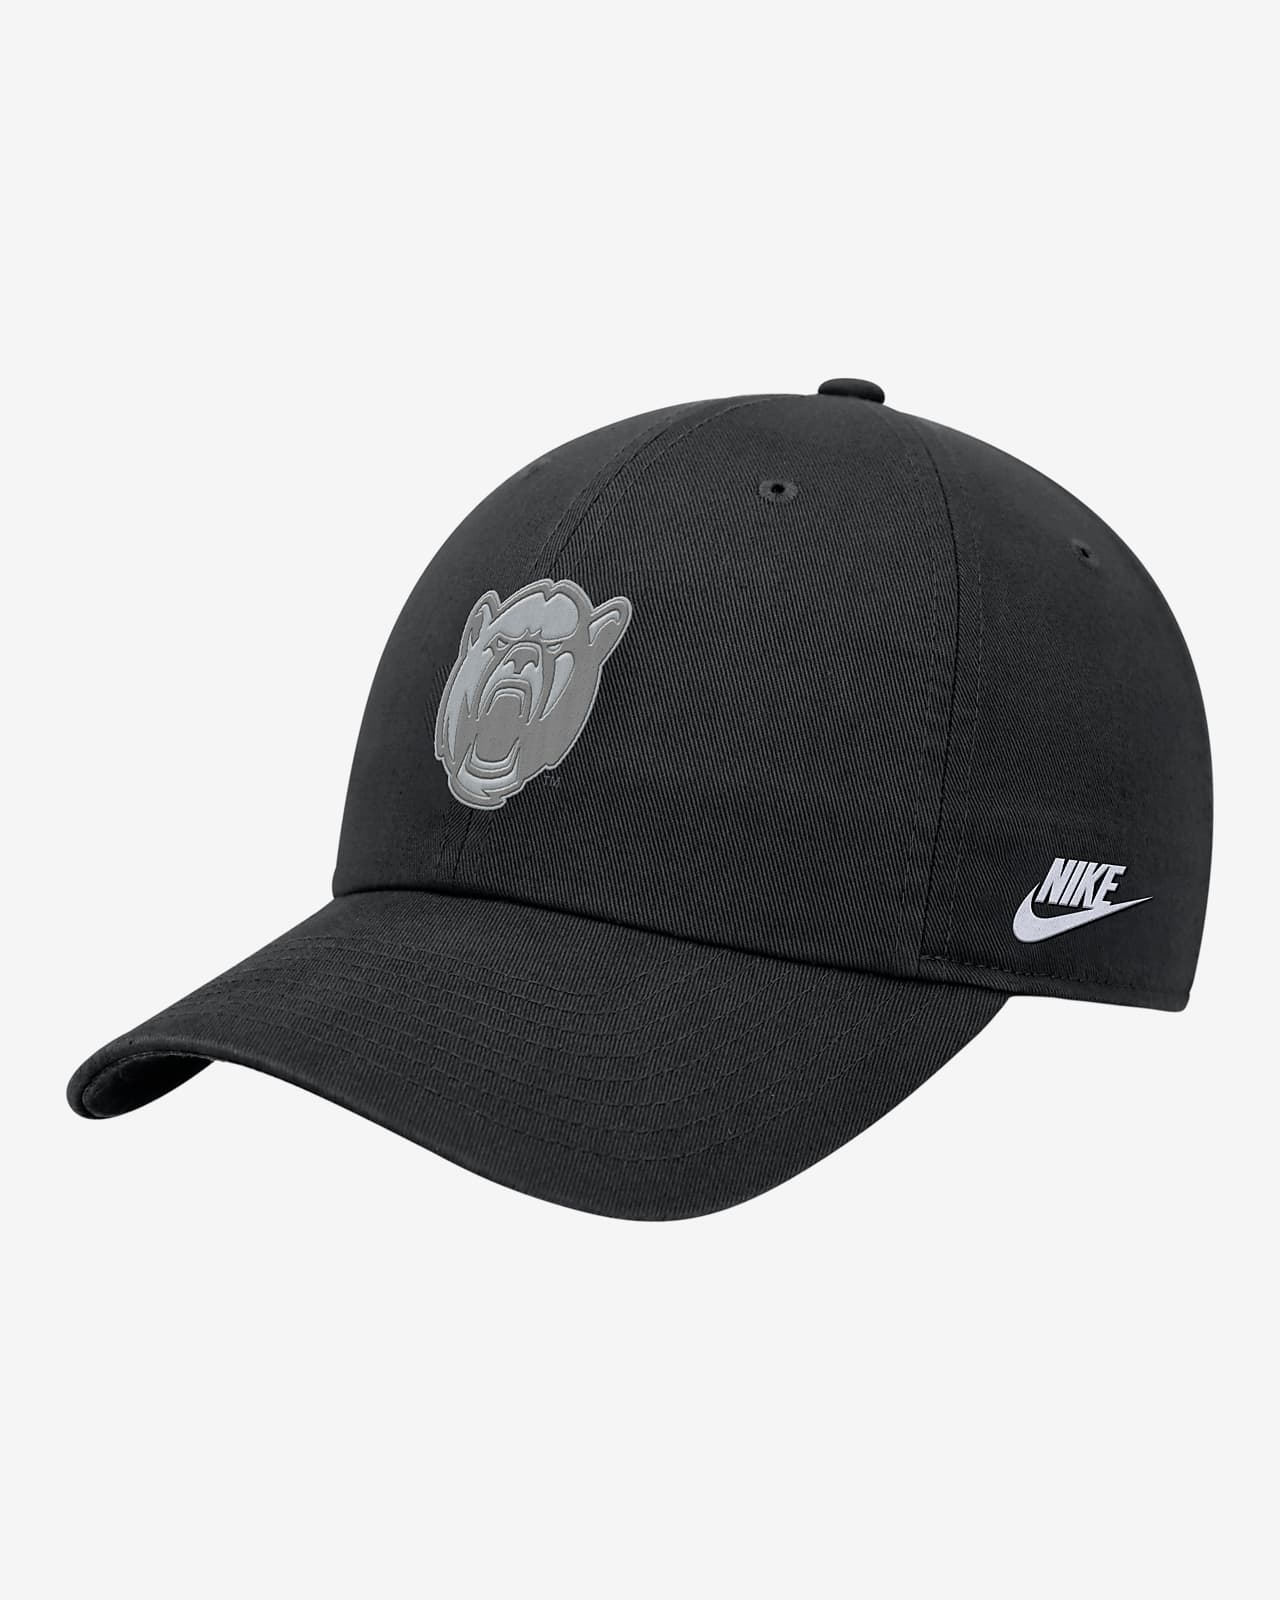 Baylor Nike College Cap